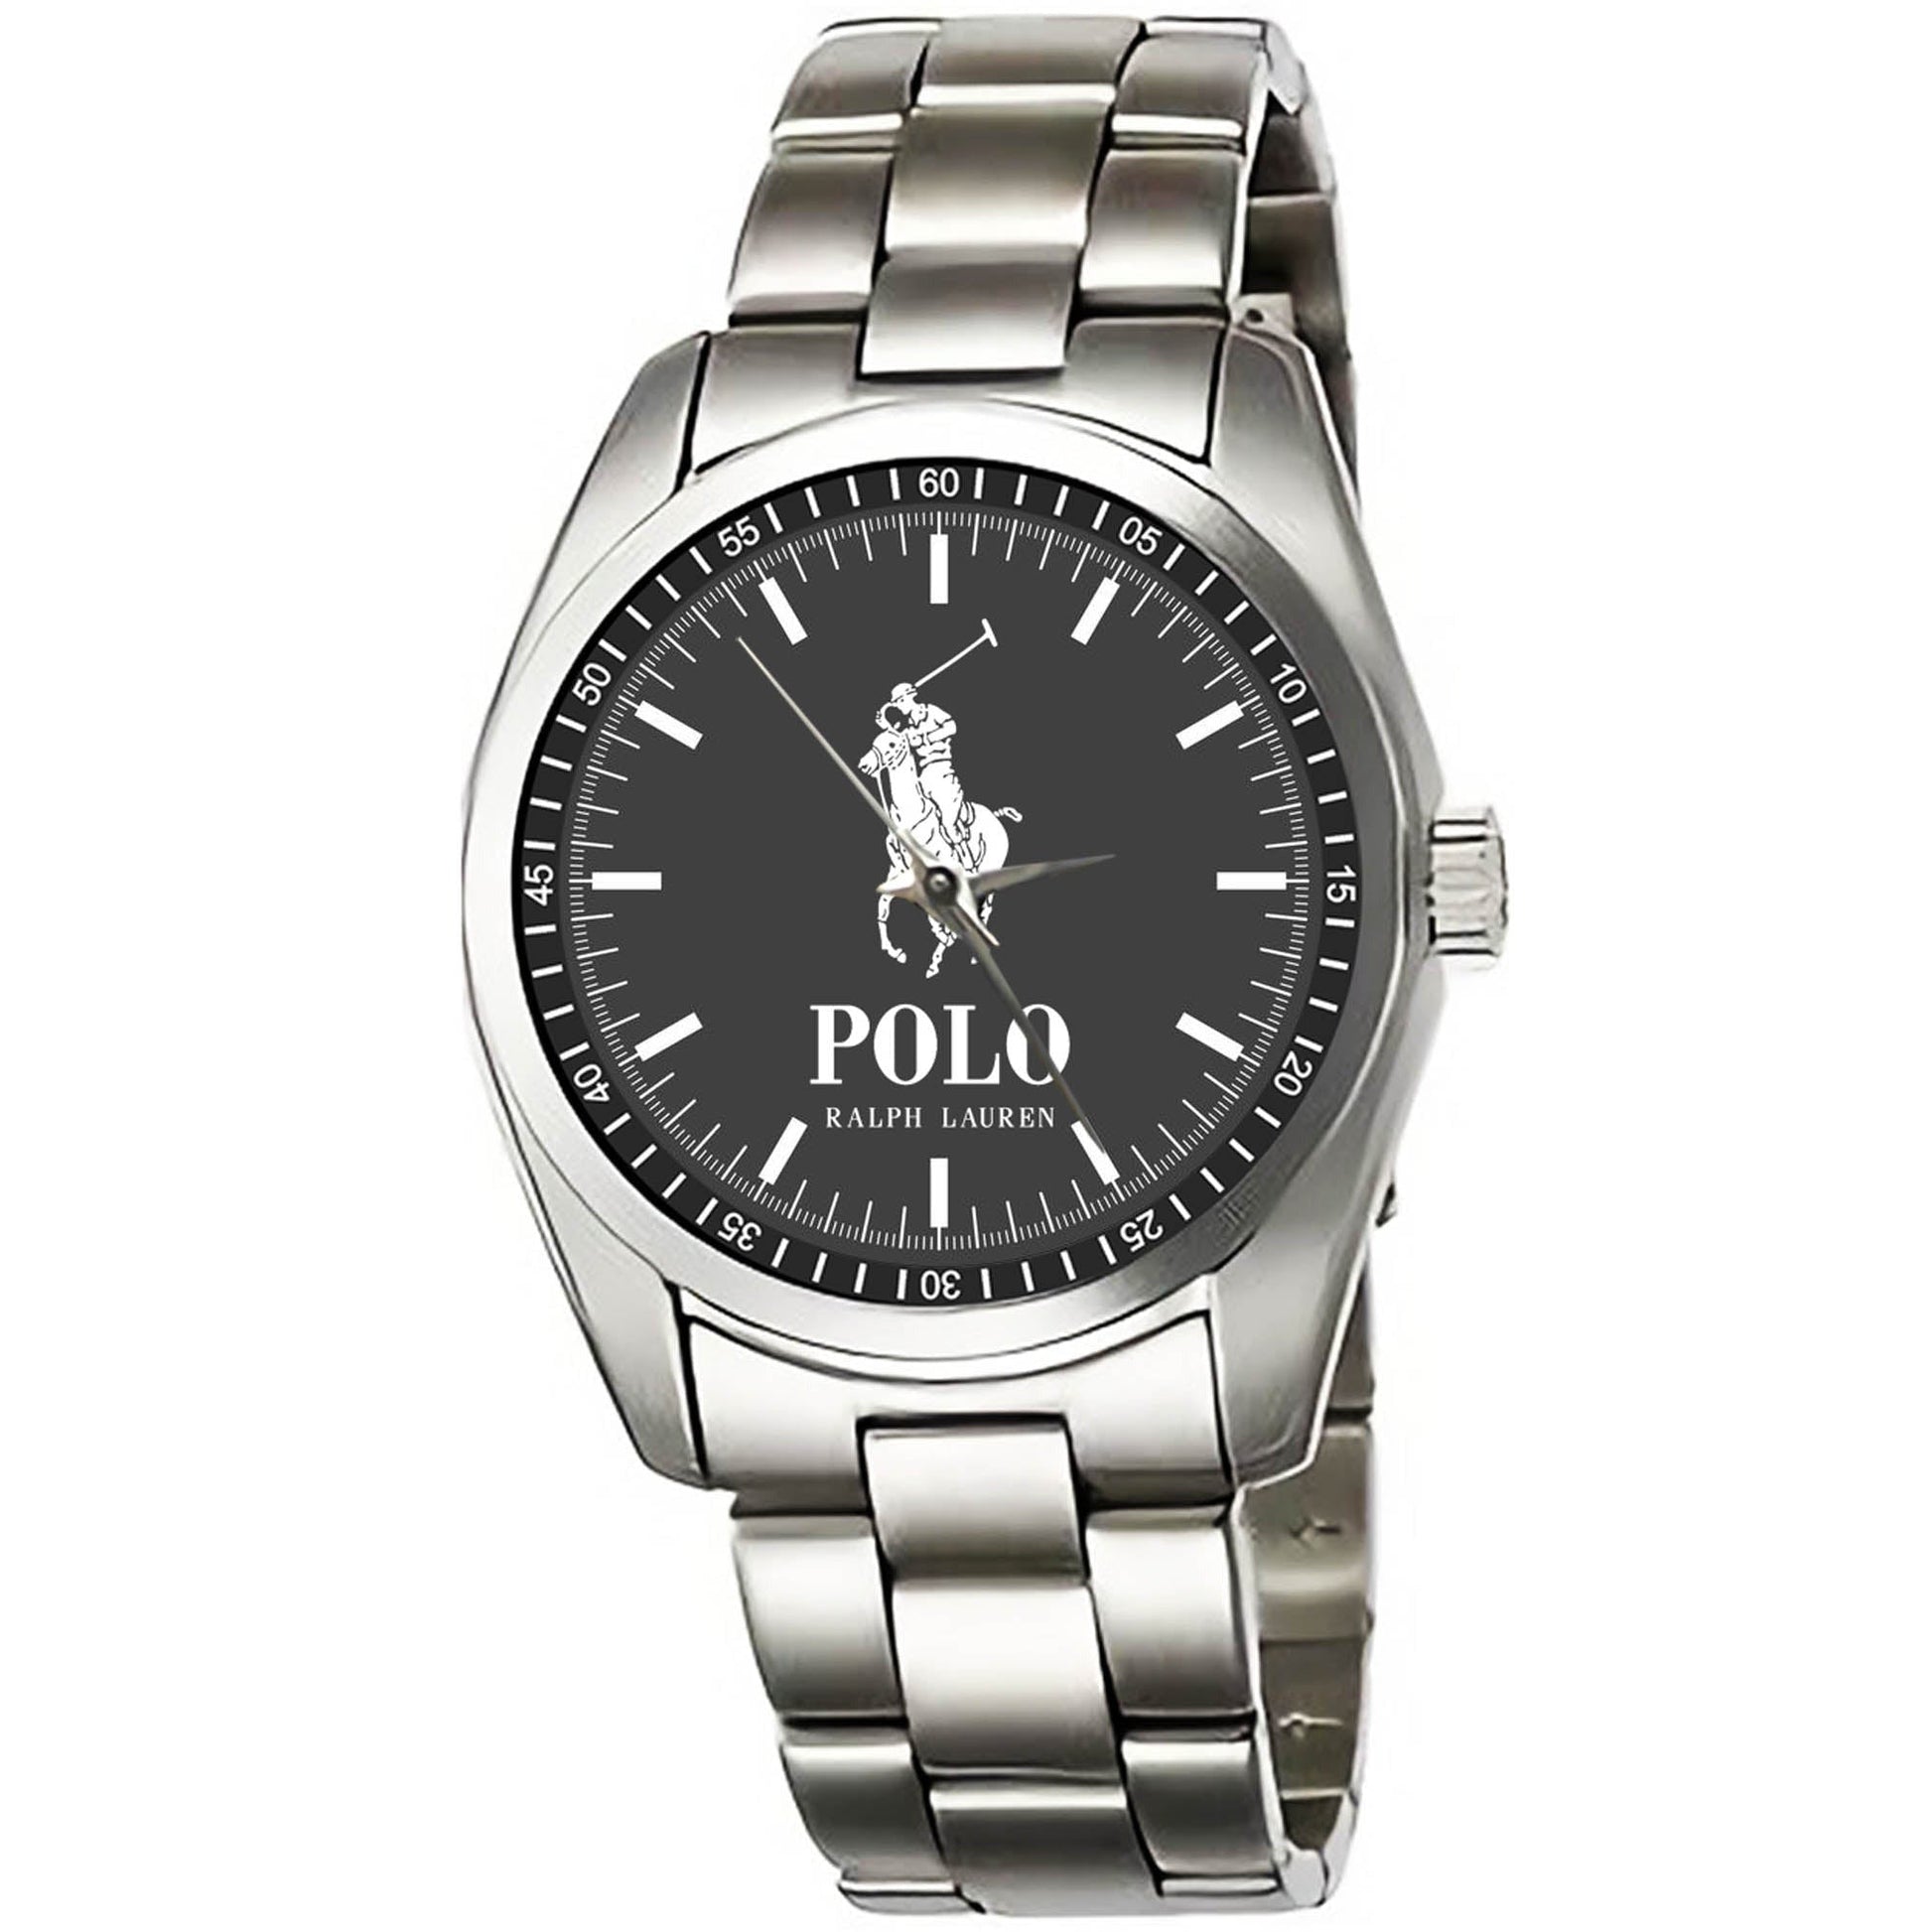 Polo Ralph Lauren Watches KP650